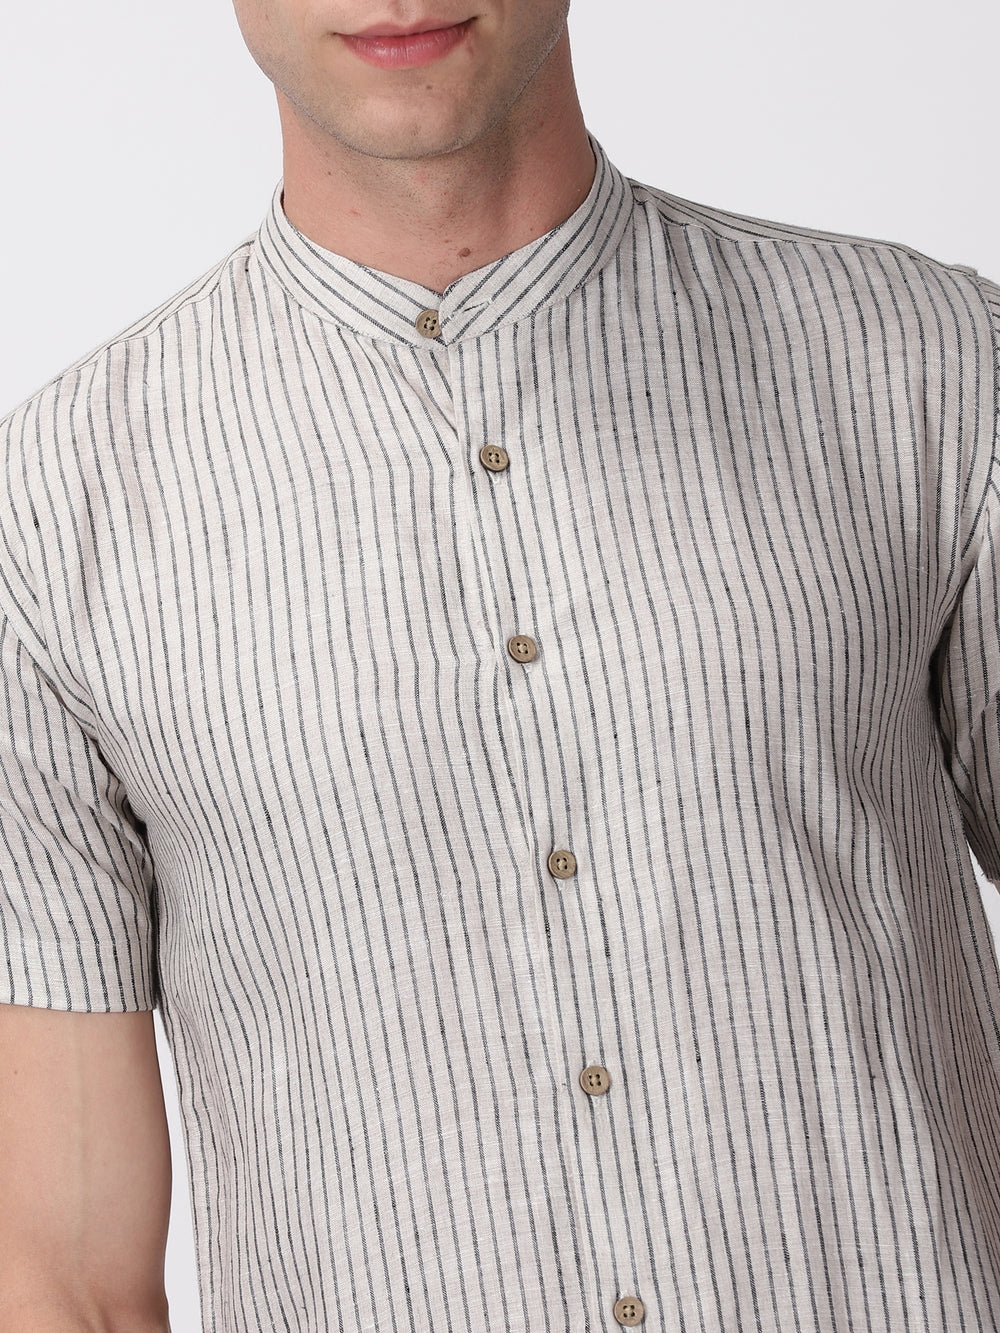 Max - Pure Linen Striped Short Sleeve Shirt - Ecru & Black